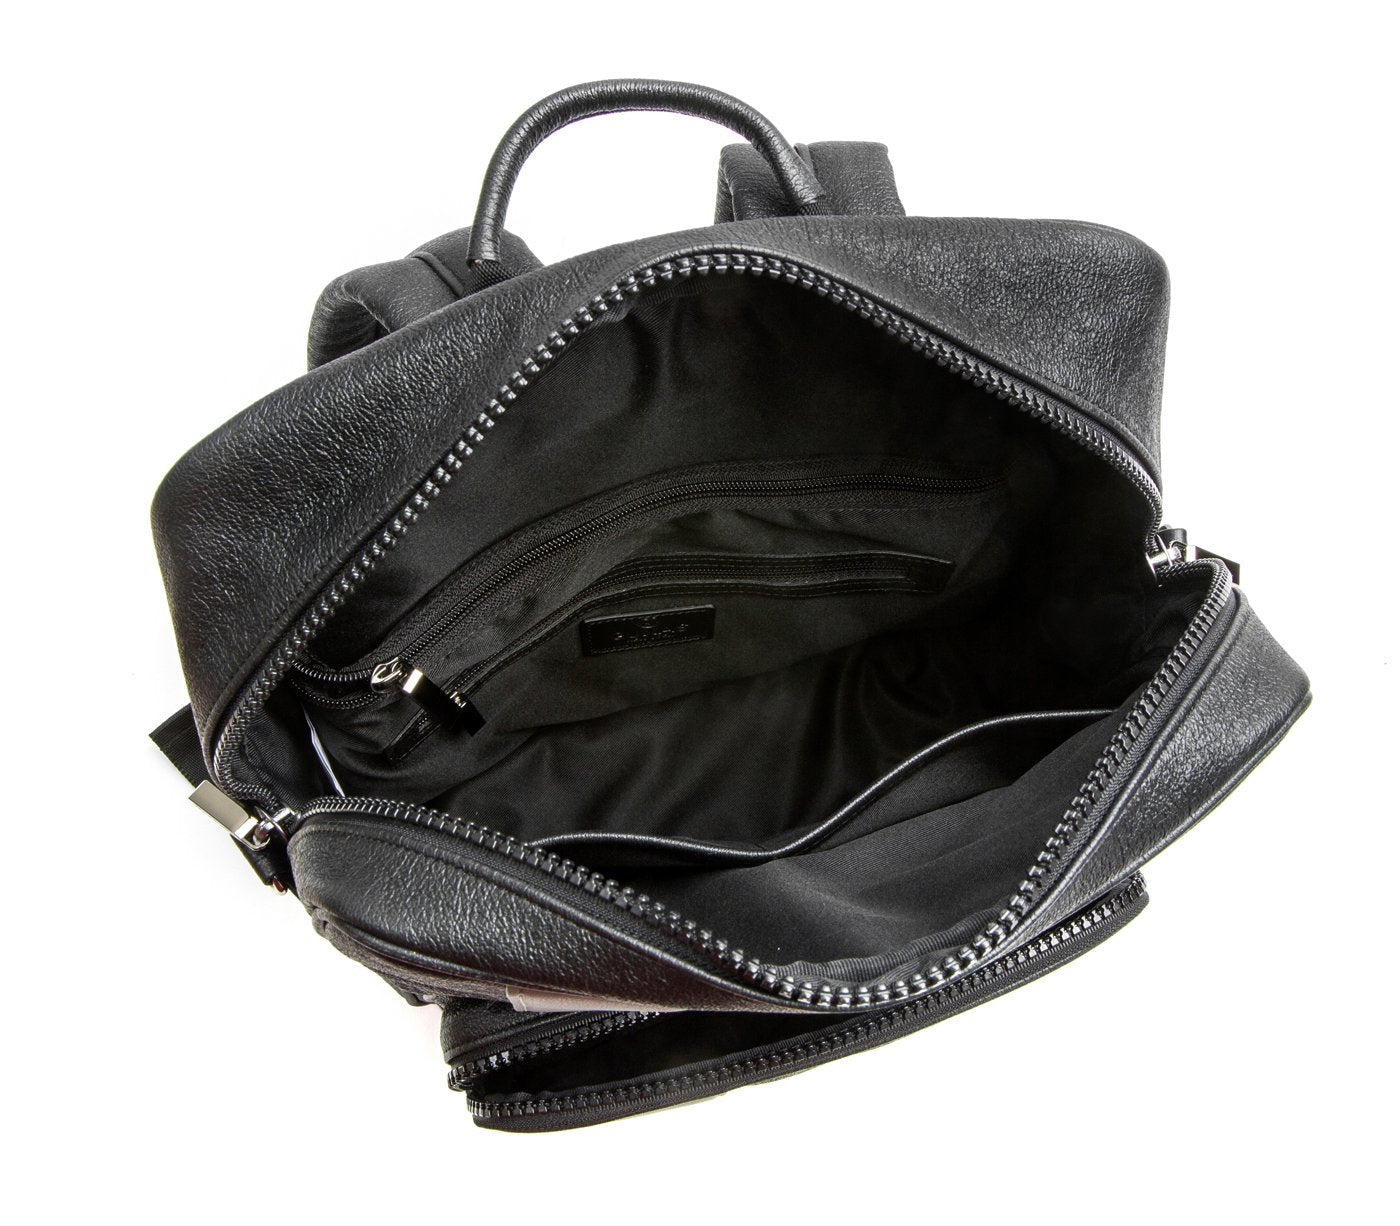 Jared - Grey Vegan Leather Men's Backpack